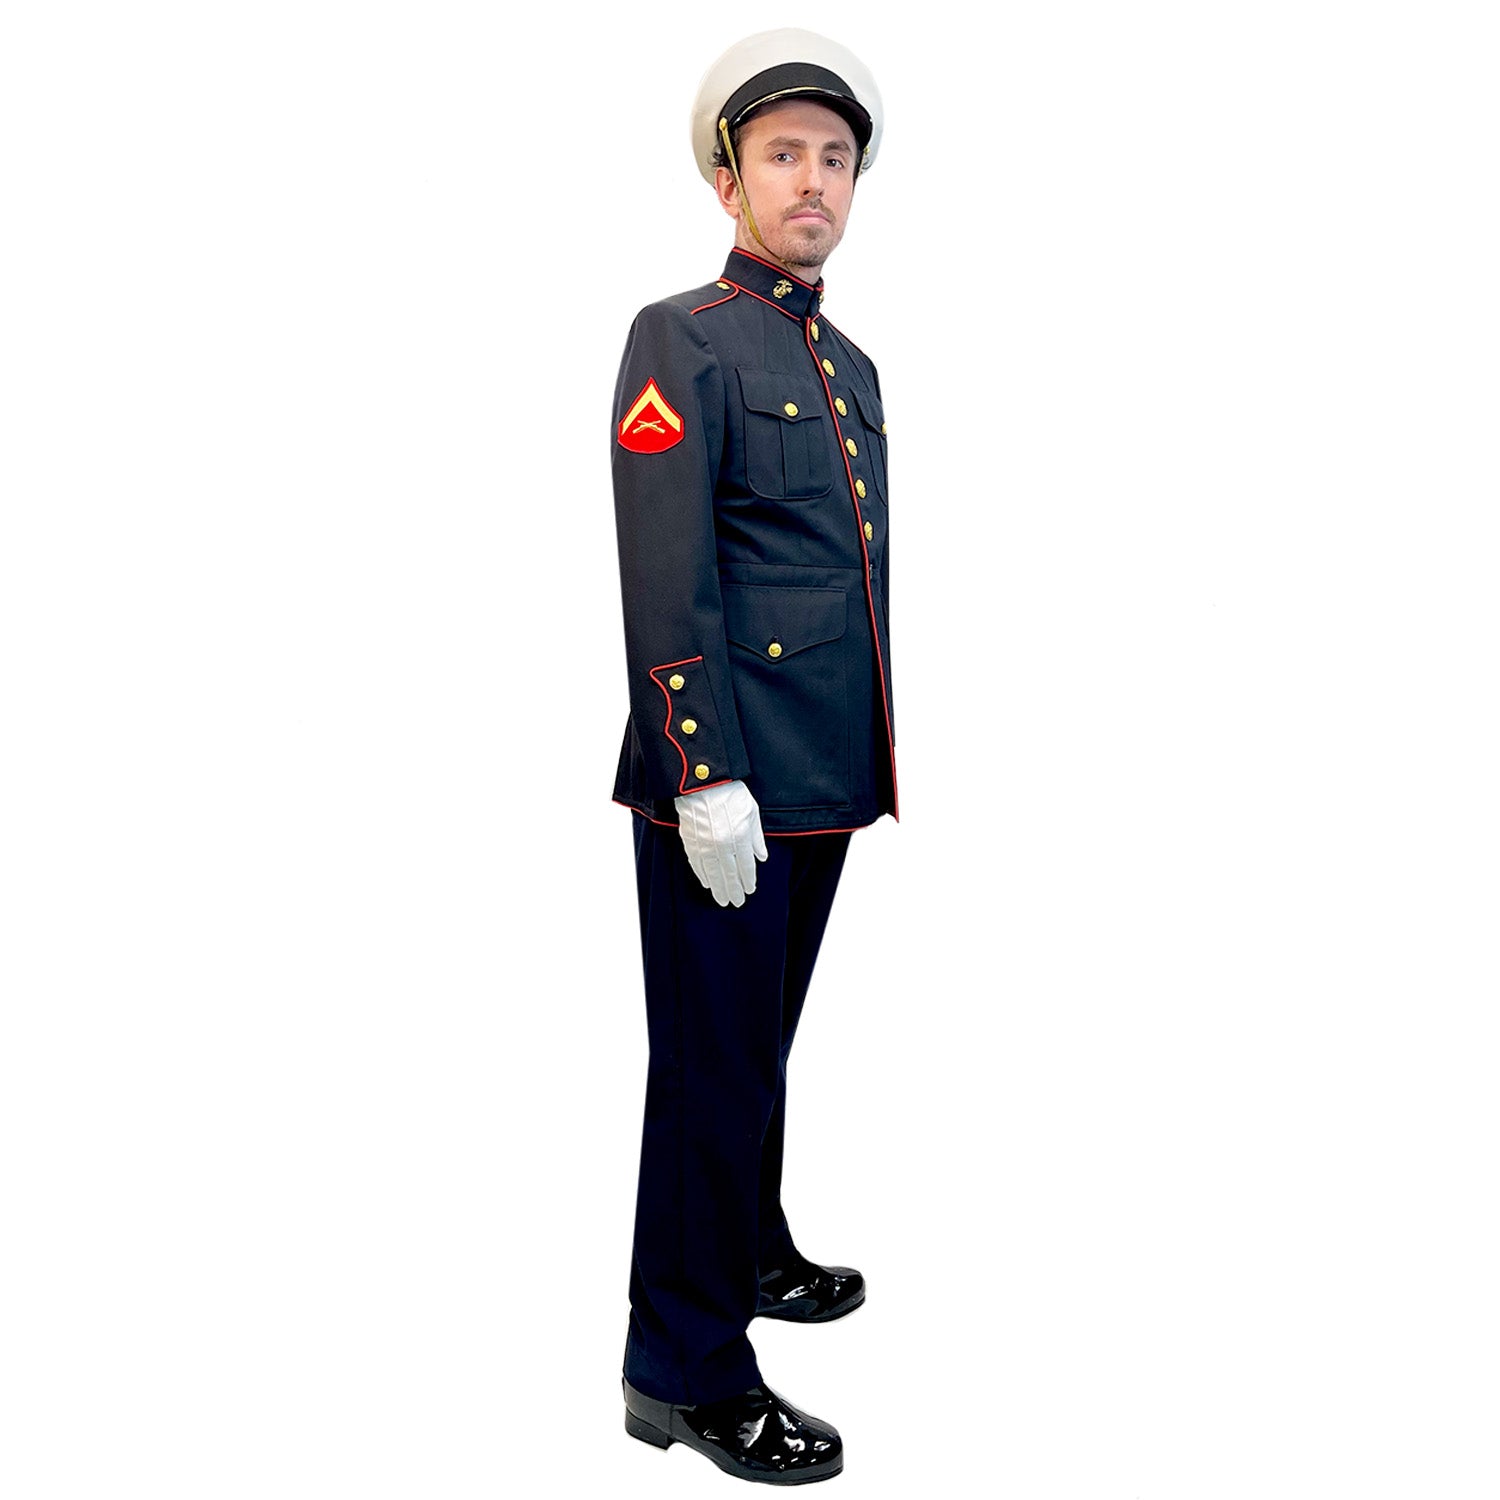 Marine Dress Blues Uniform Adult Costume